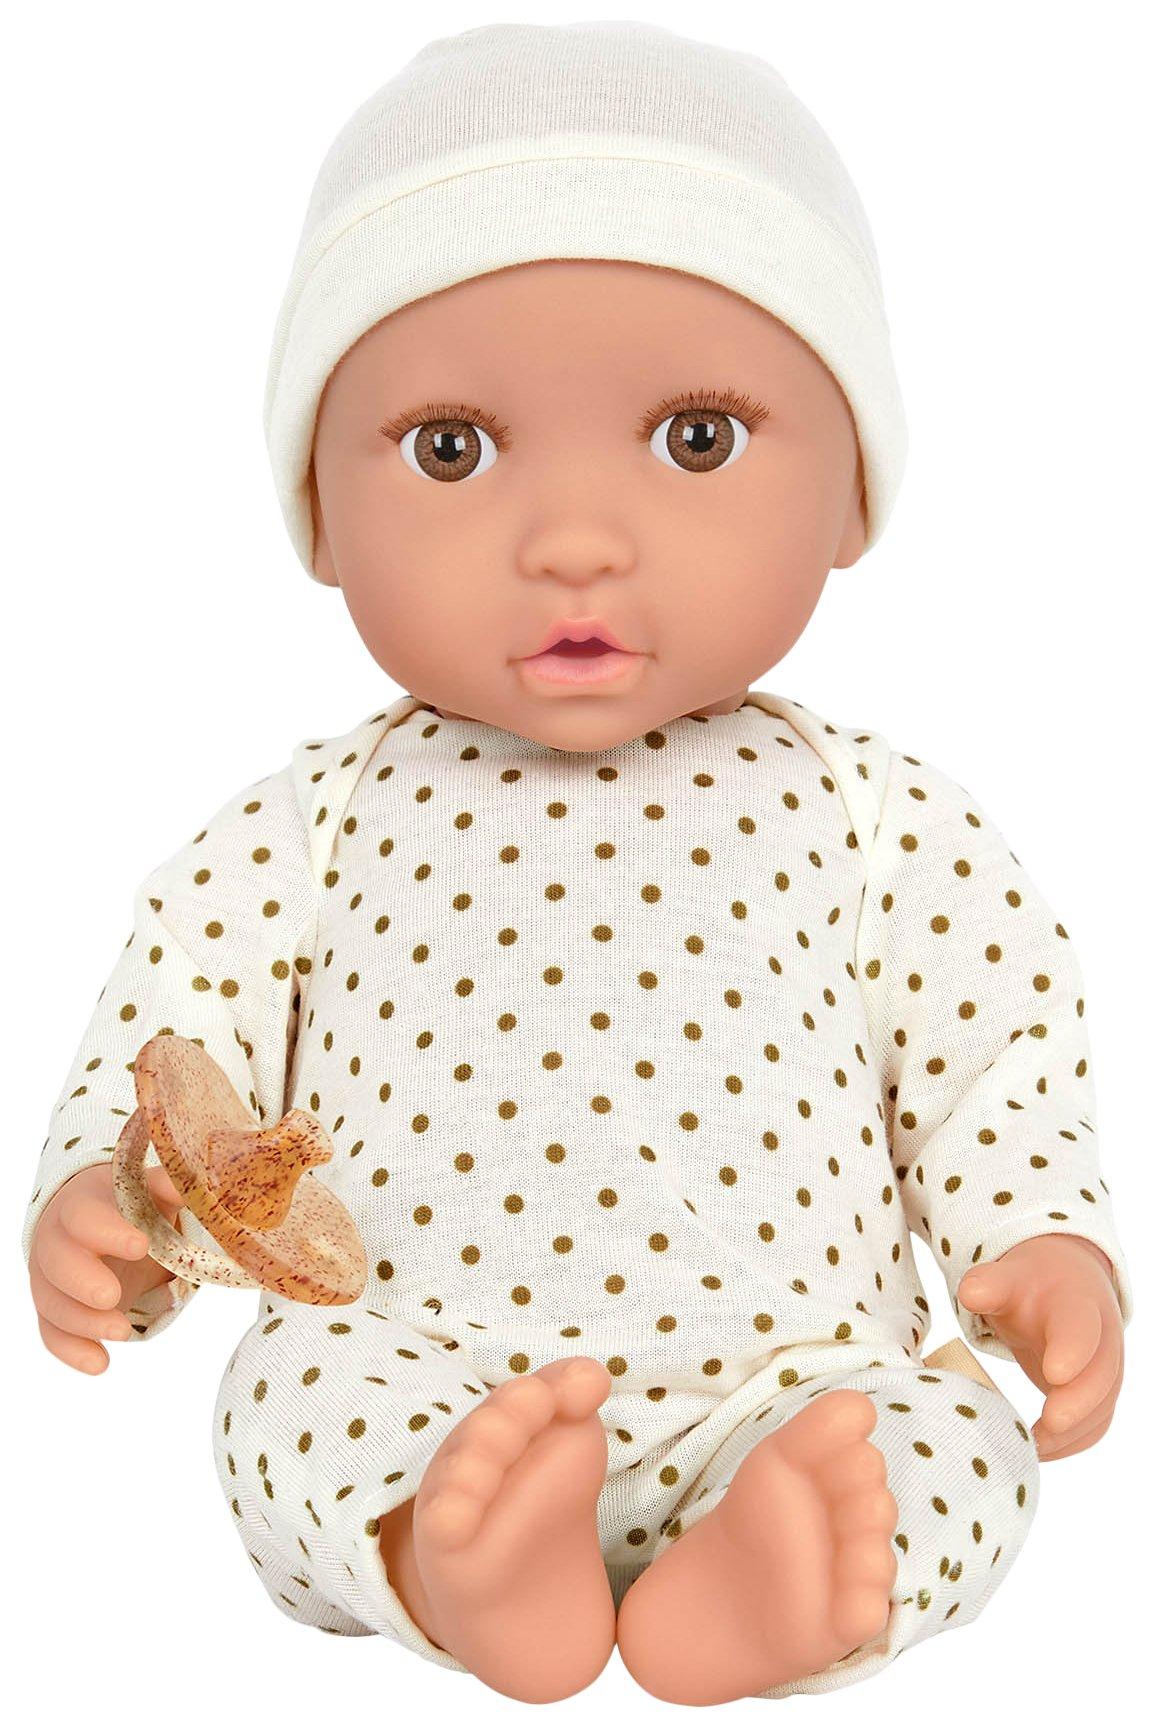 BABI by Battat Baby Girl 14  Newborn Medium Skin Doll